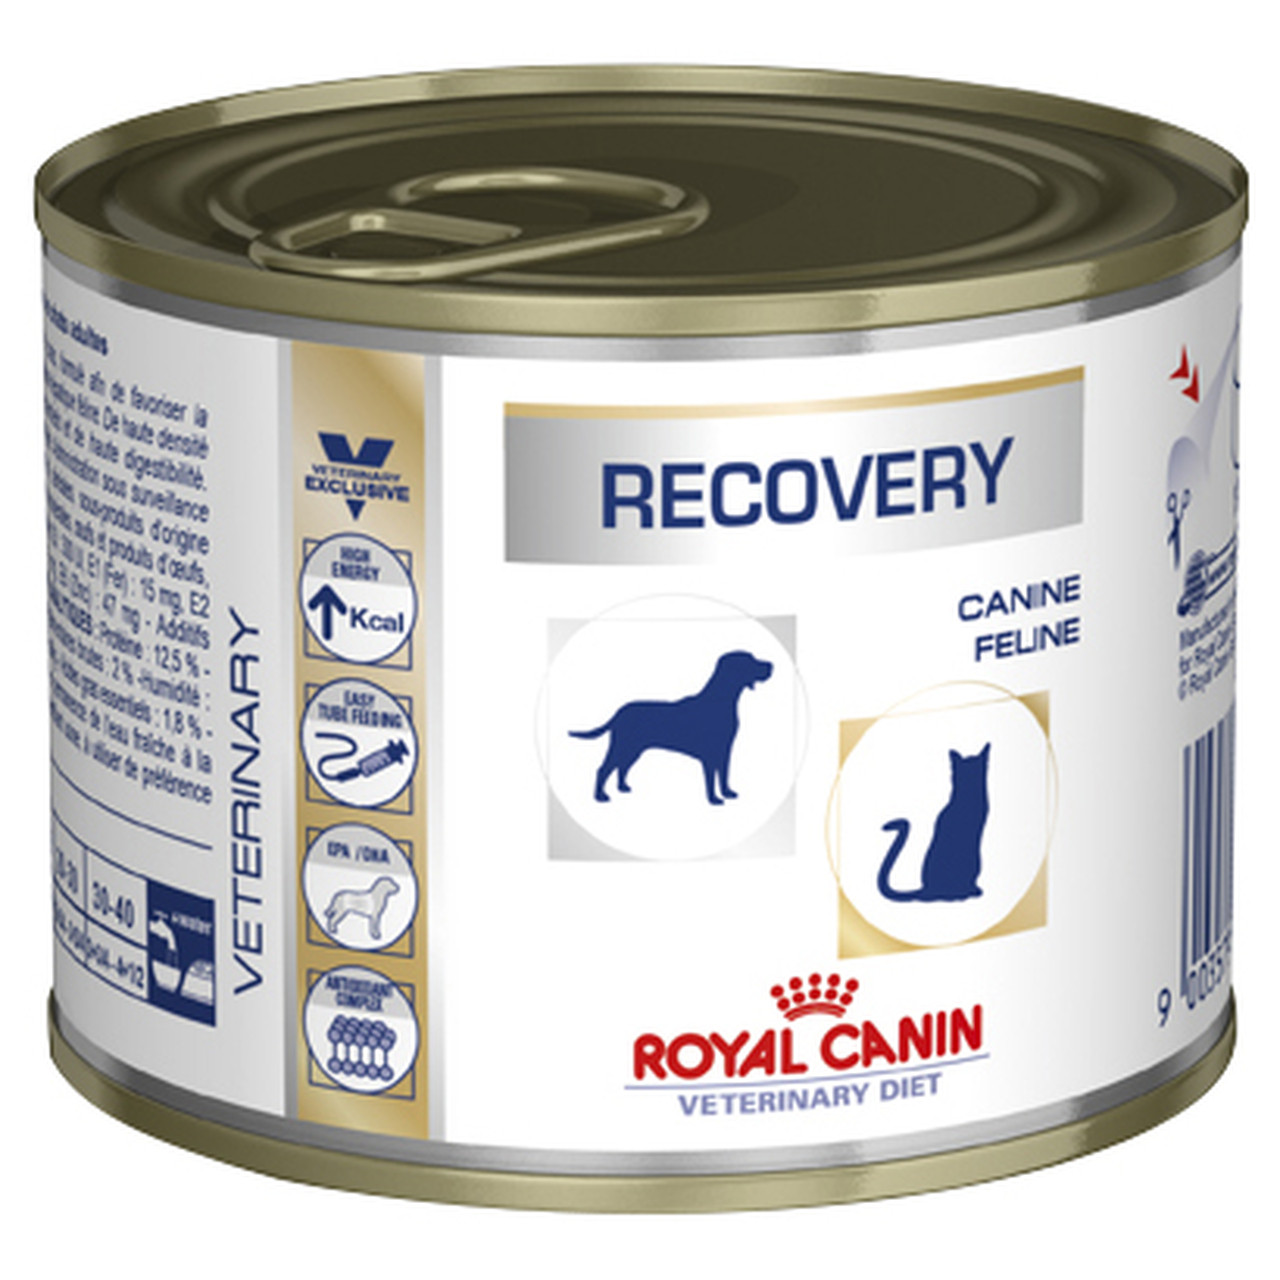 Dialoog Refrein Overeenkomstig met Royal Canin Recovery Can Wet Food - Vet Warehouse